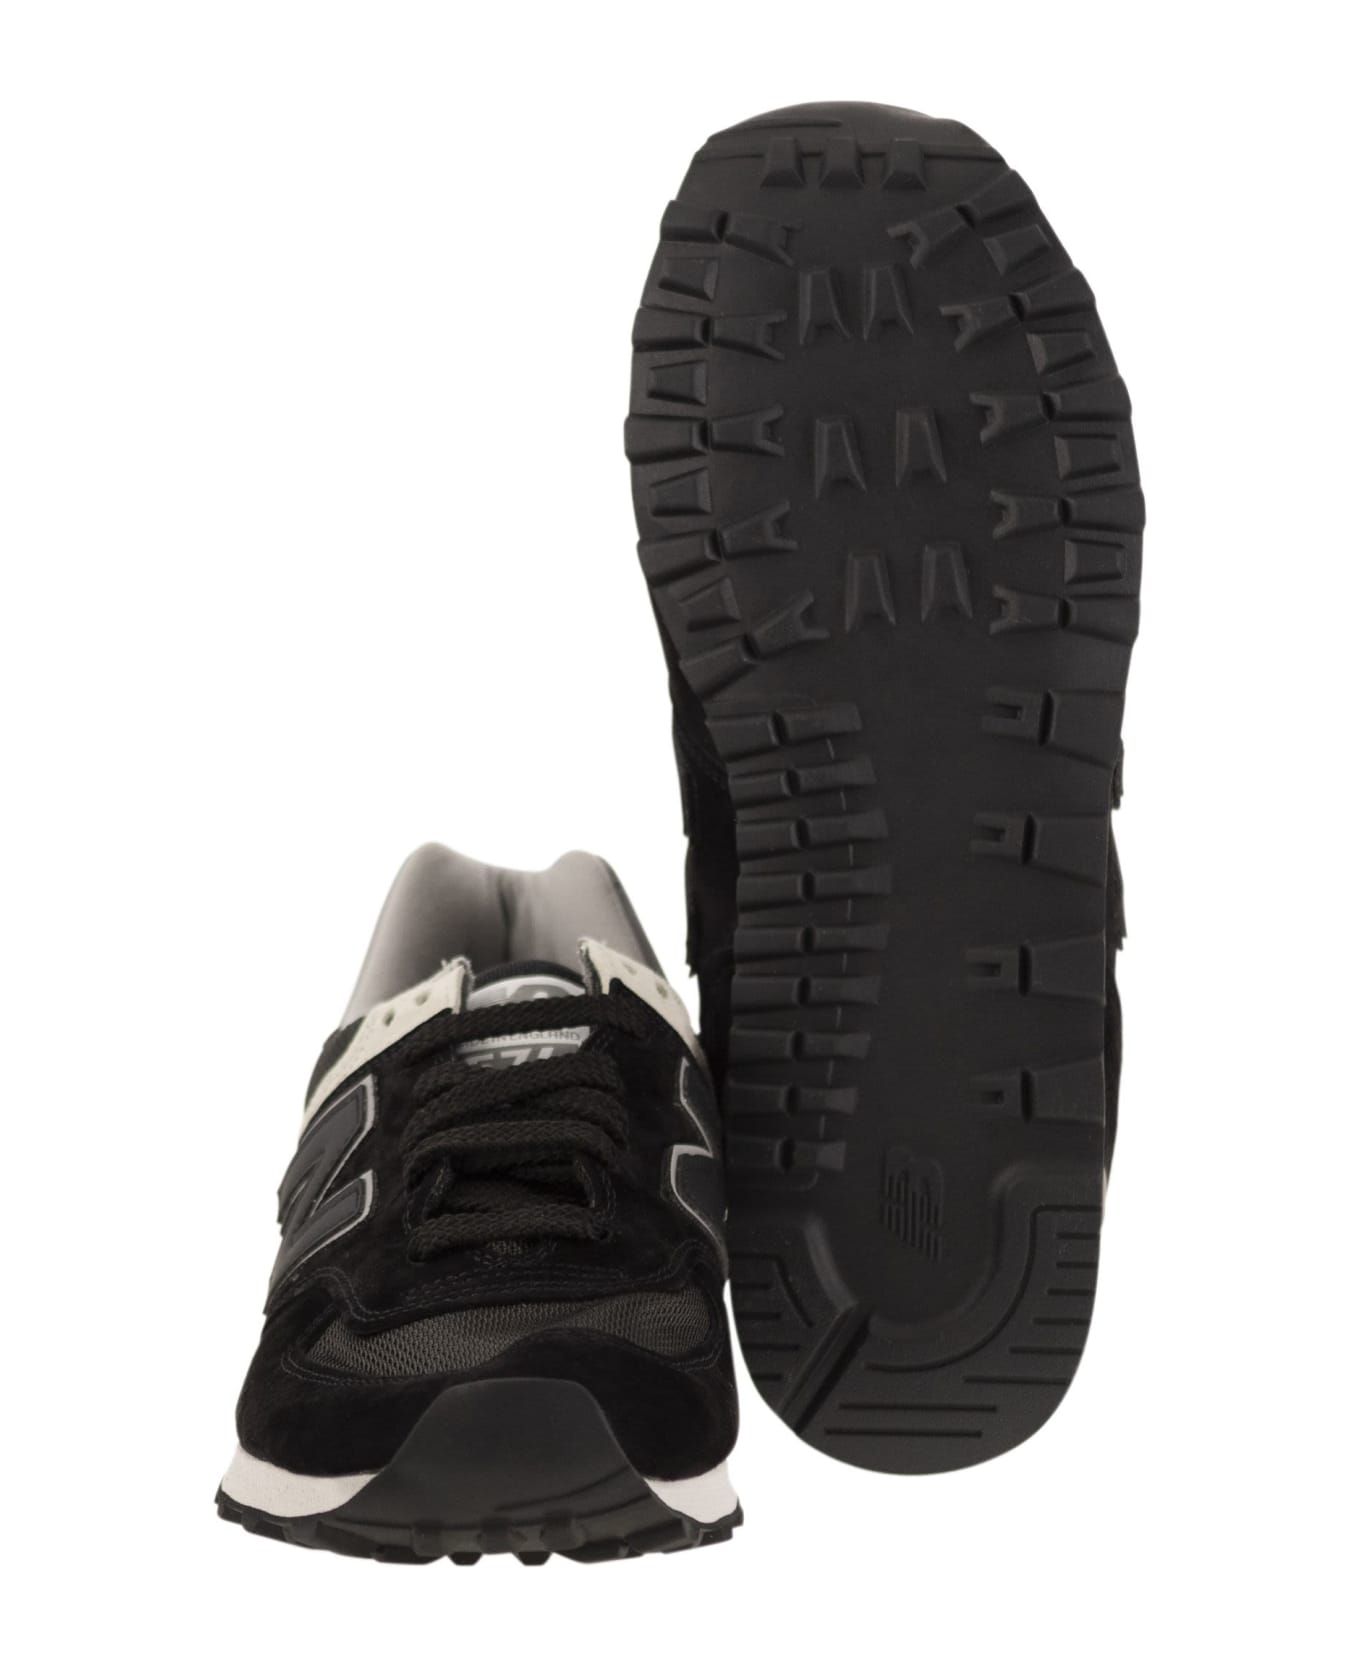 New Balance 576 - Sneakers - Black